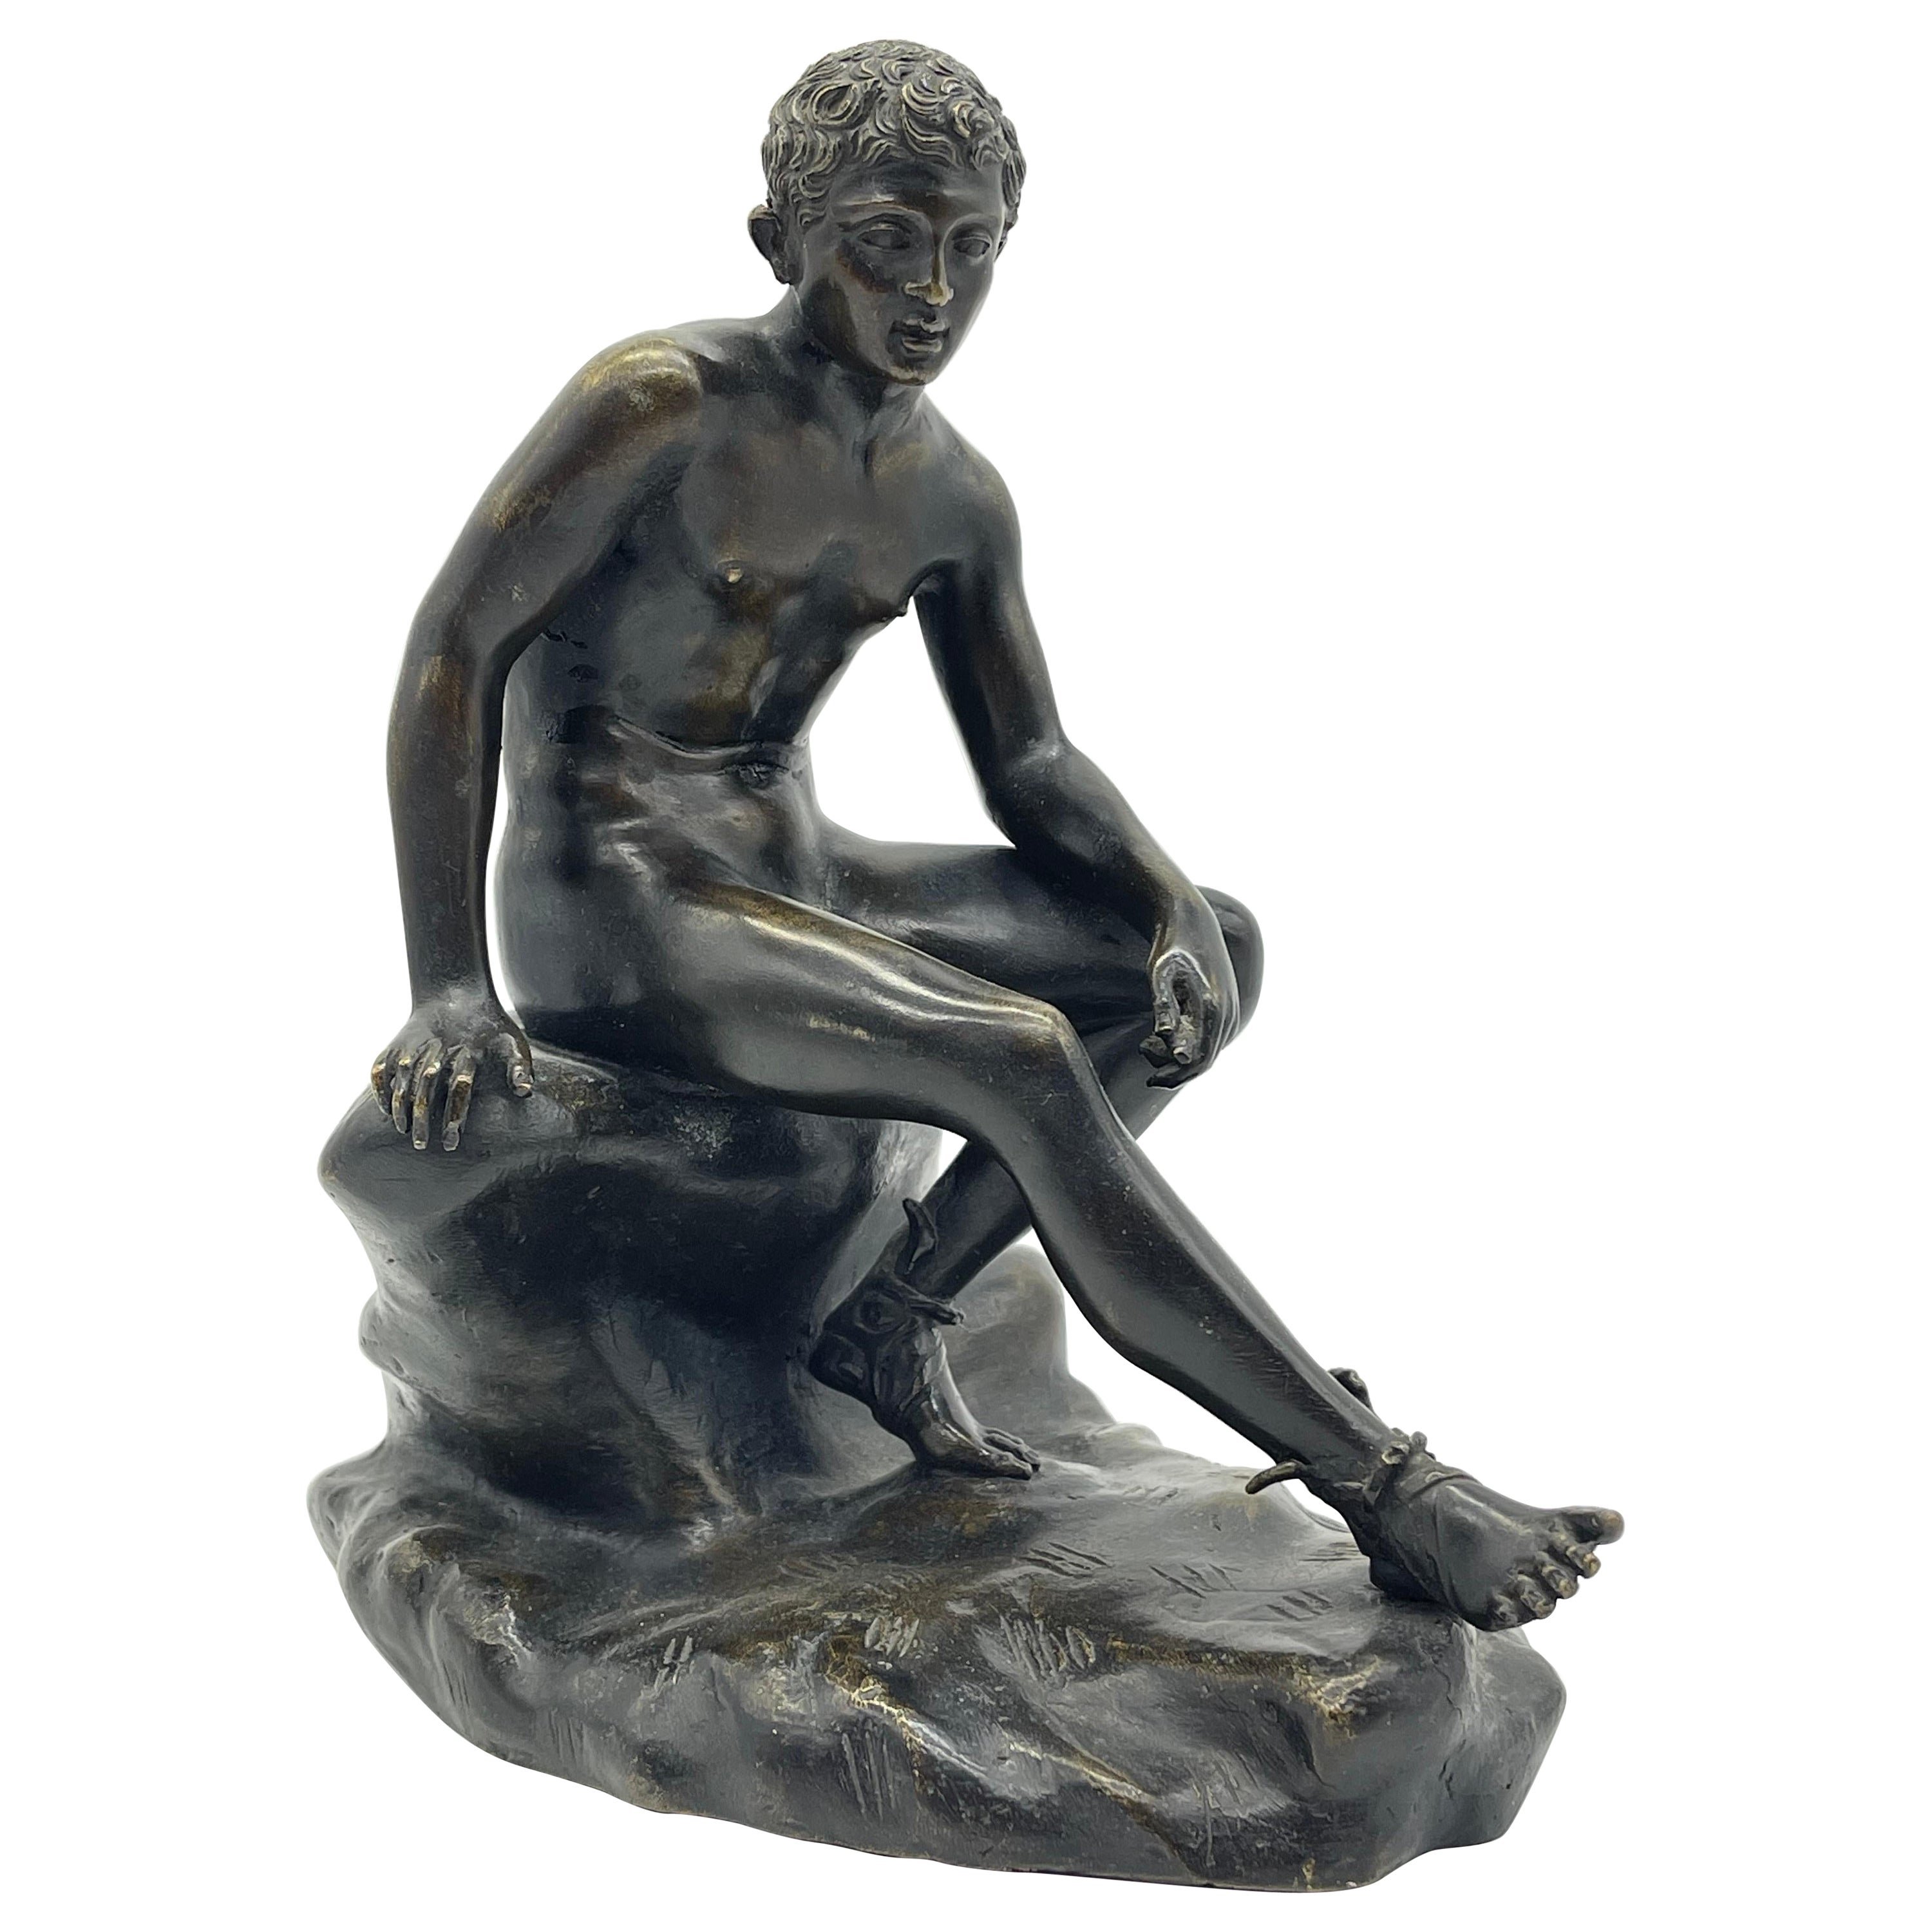 Seated athletic bronze sculpture / Figure Greek - Roman mythology For Sale